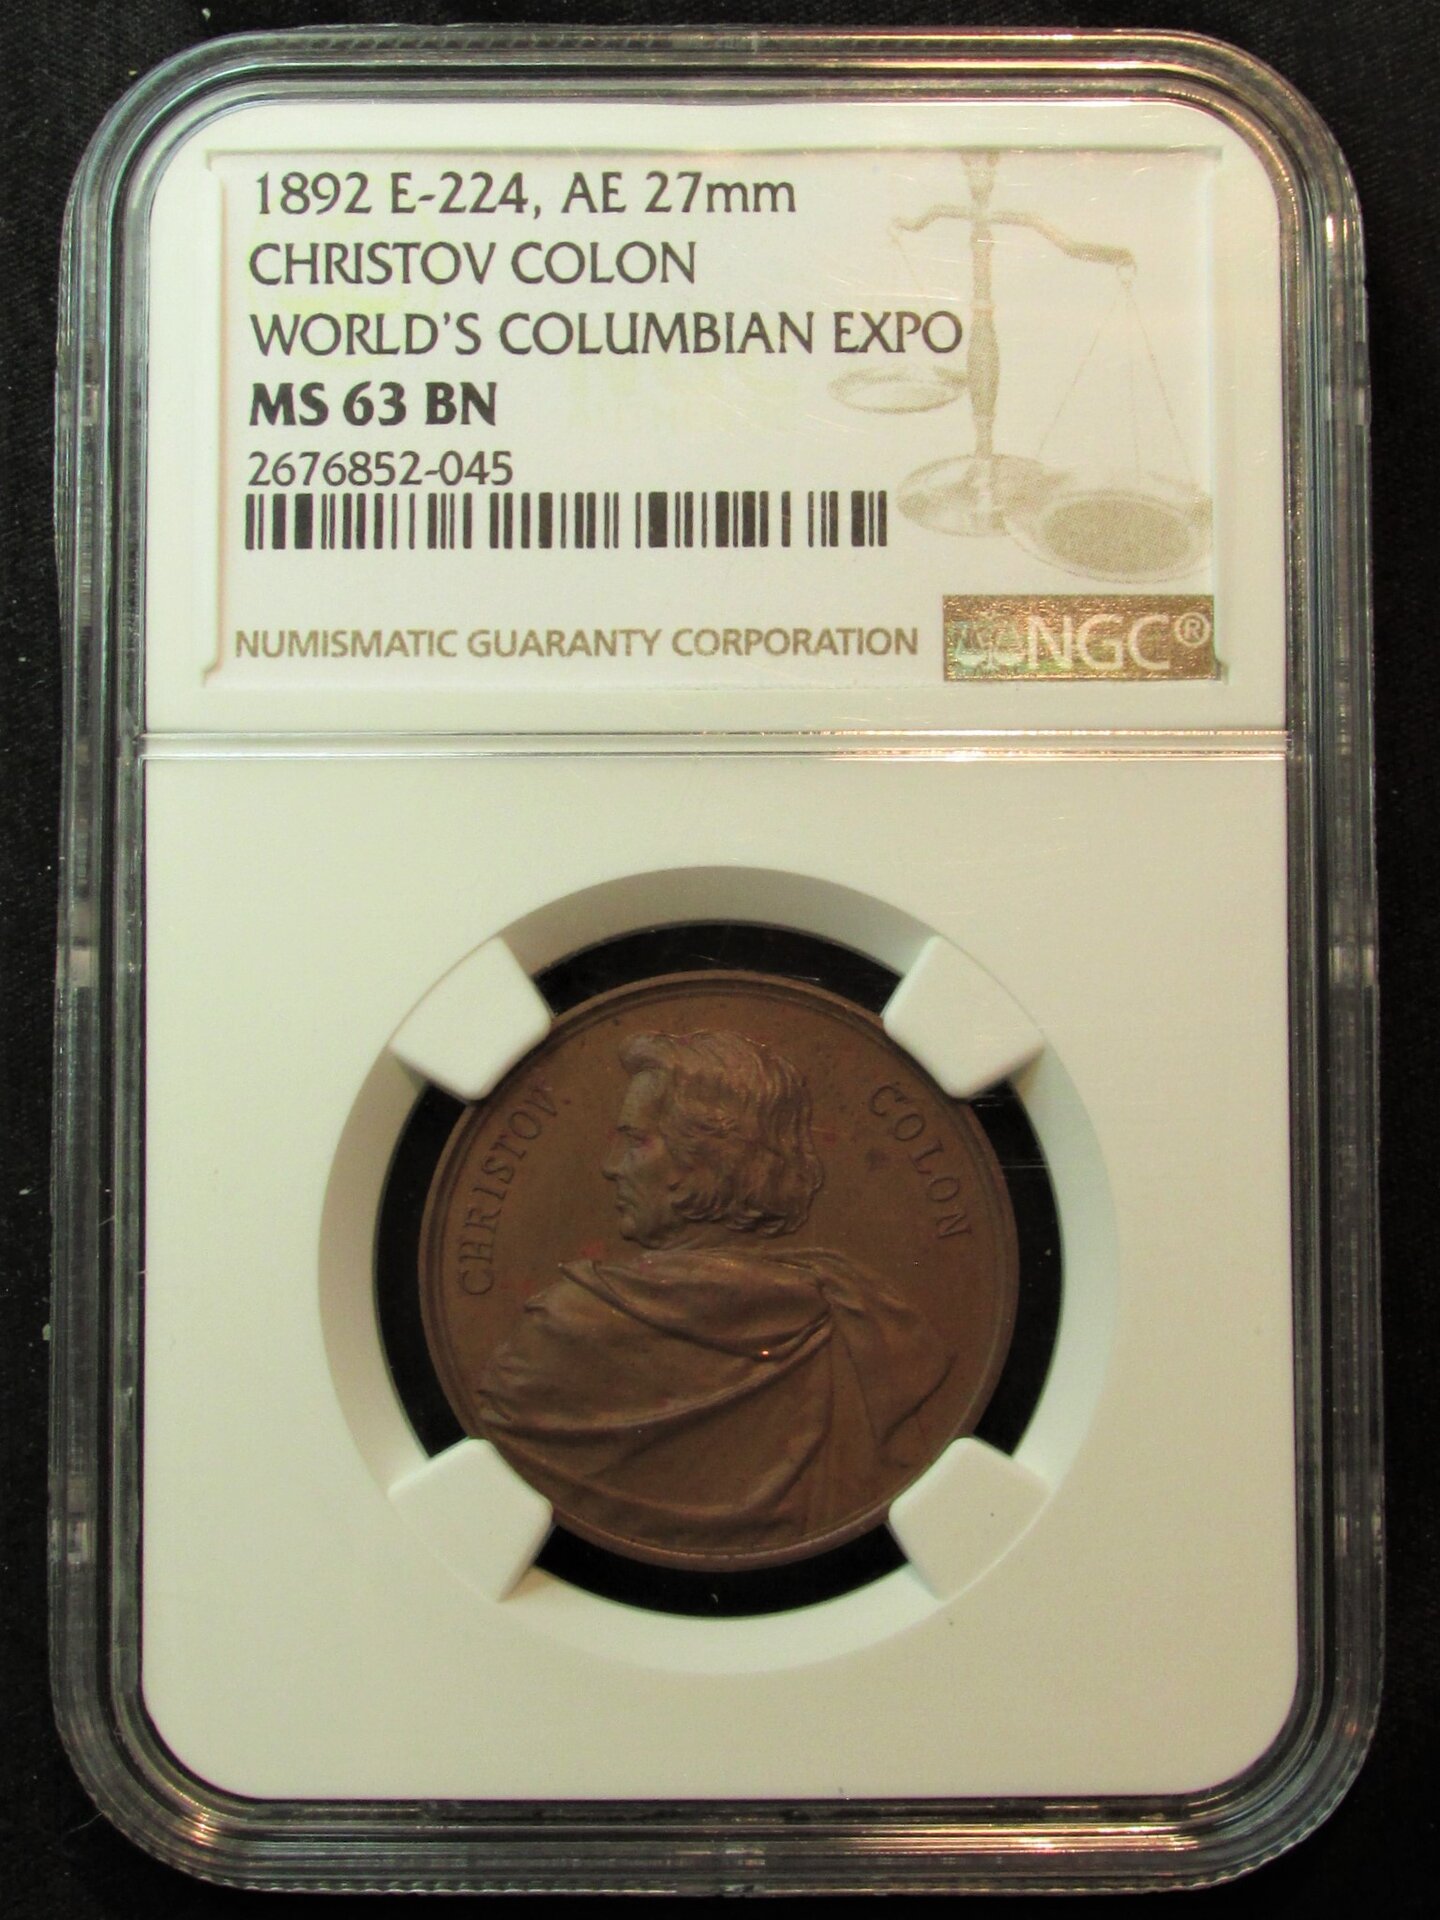 1892 World's Colombian Exposition - Christov Colon Medal (Eglit-224) - obverse slab.JPG